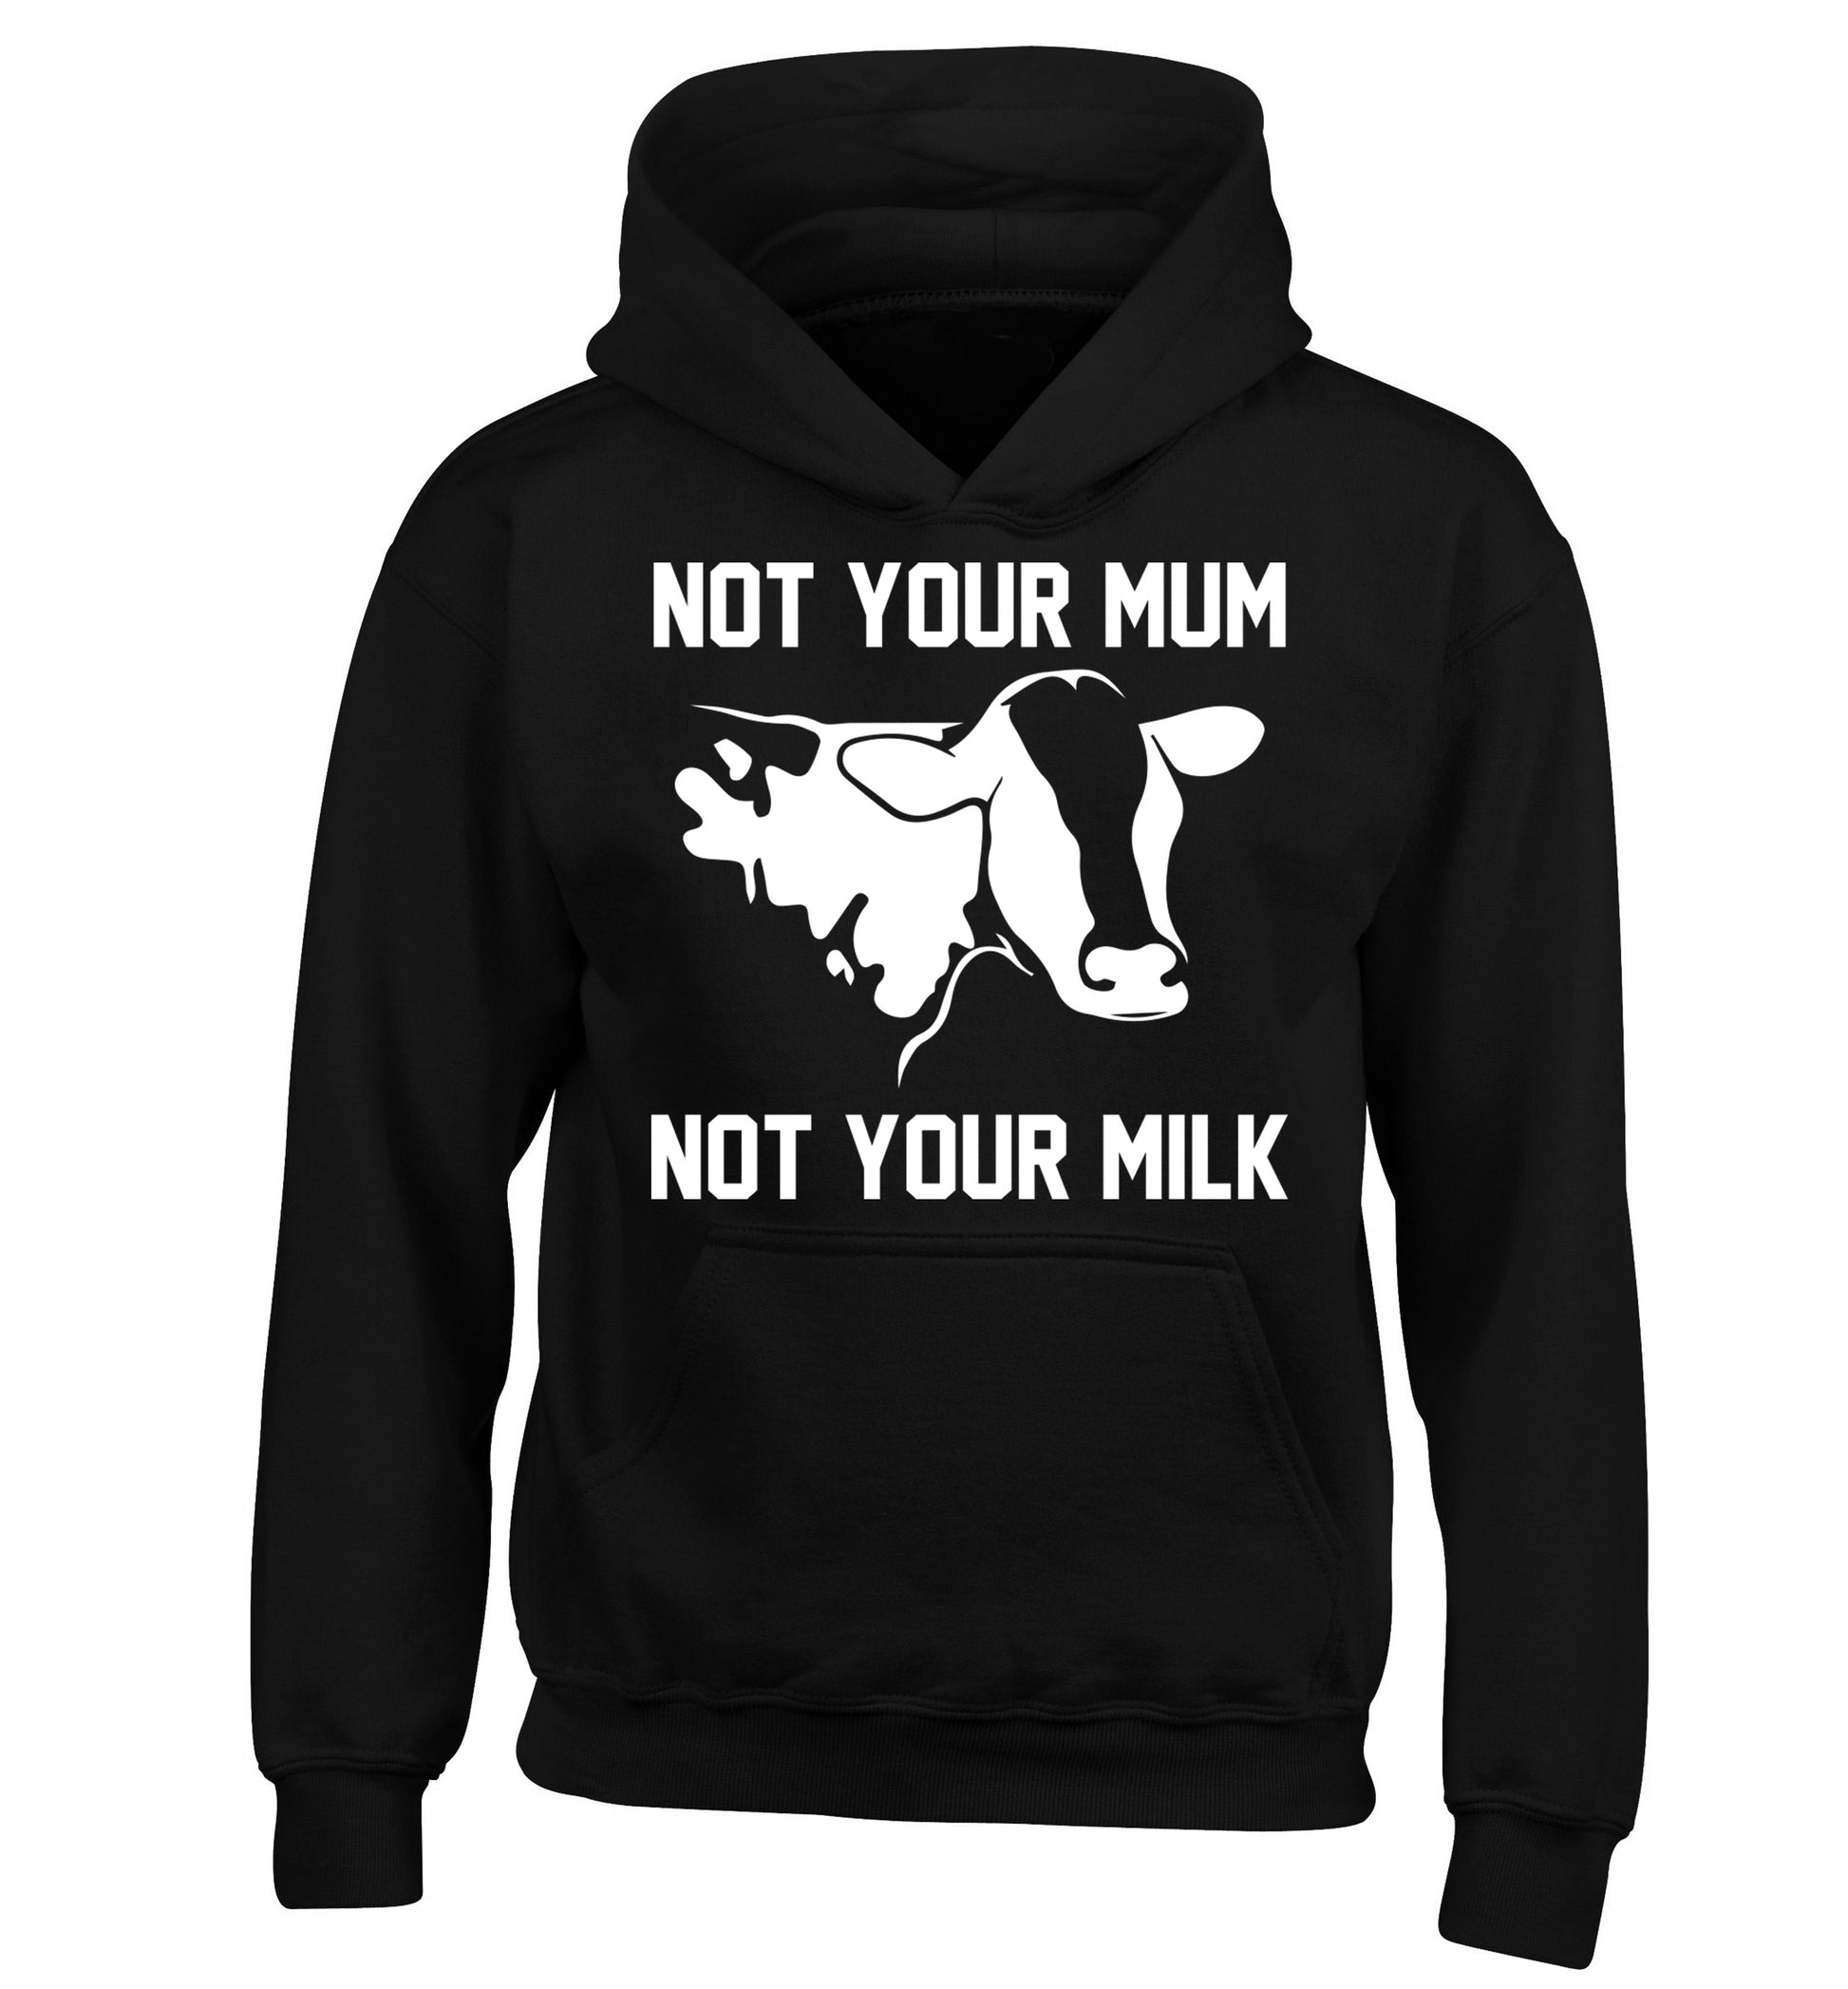 Not your mum not your milk children's black hoodie 12-14 Years